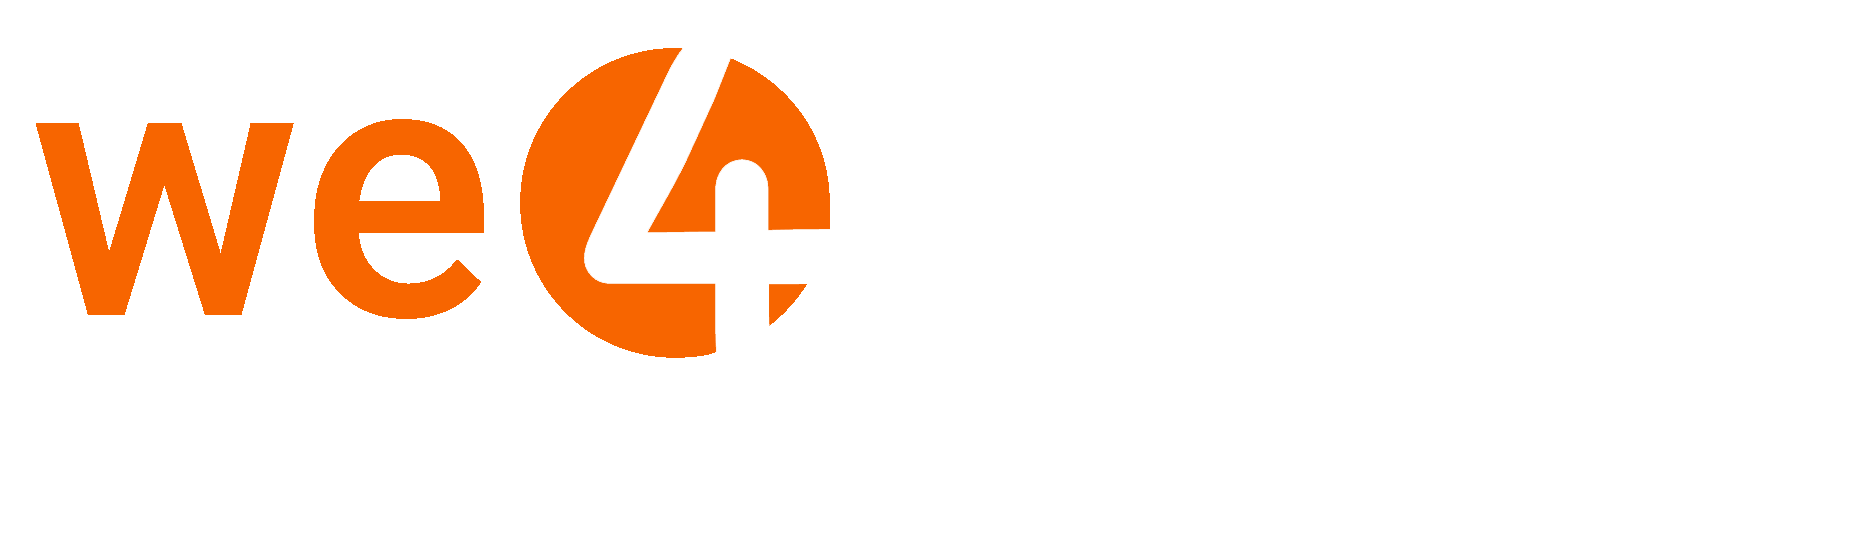 We4media - Marketing & communicatie